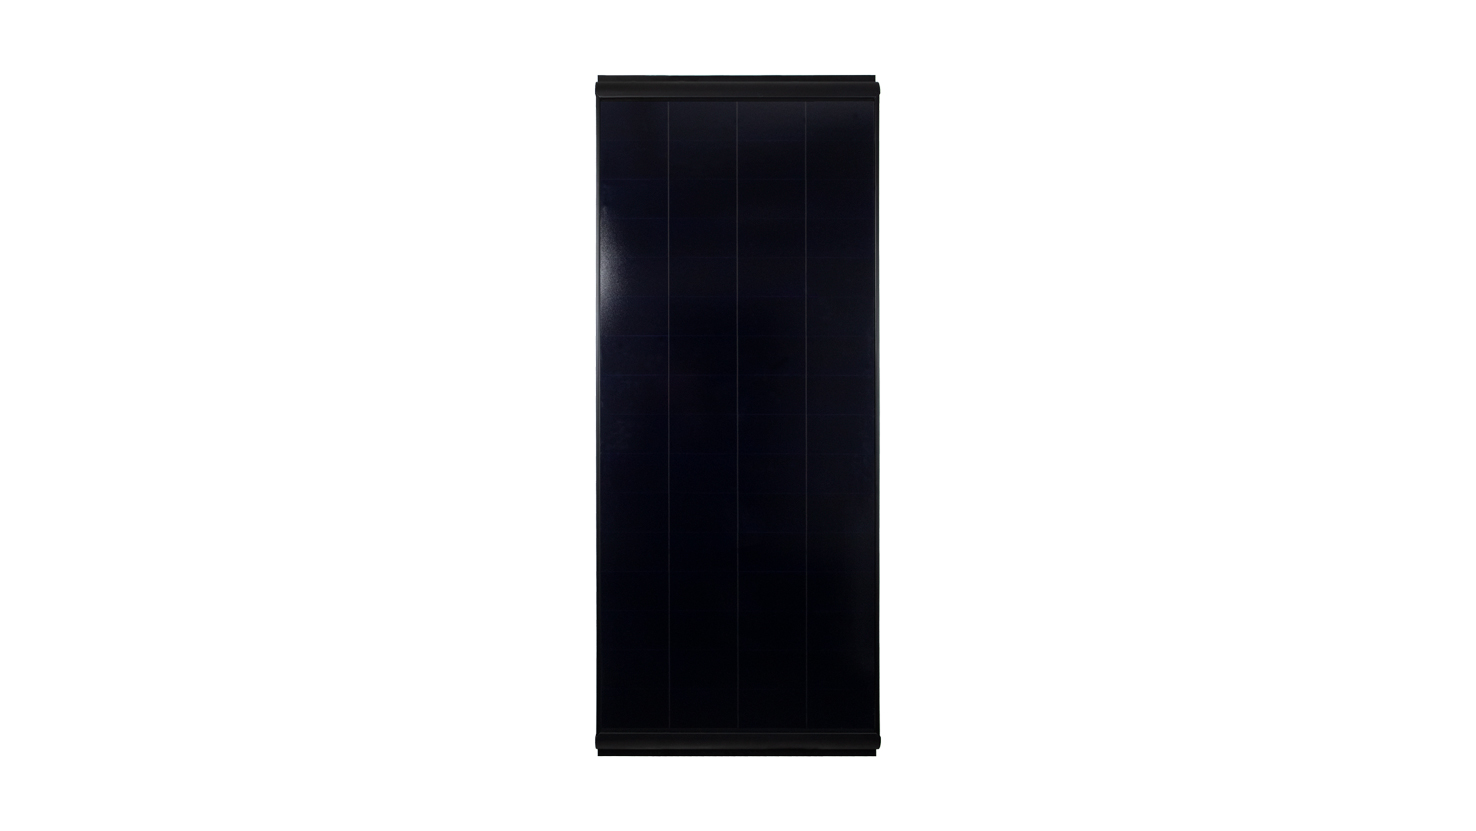 SP180 - Pannello solare 180 Watt<br />
1615mm x 670mm x 40mm